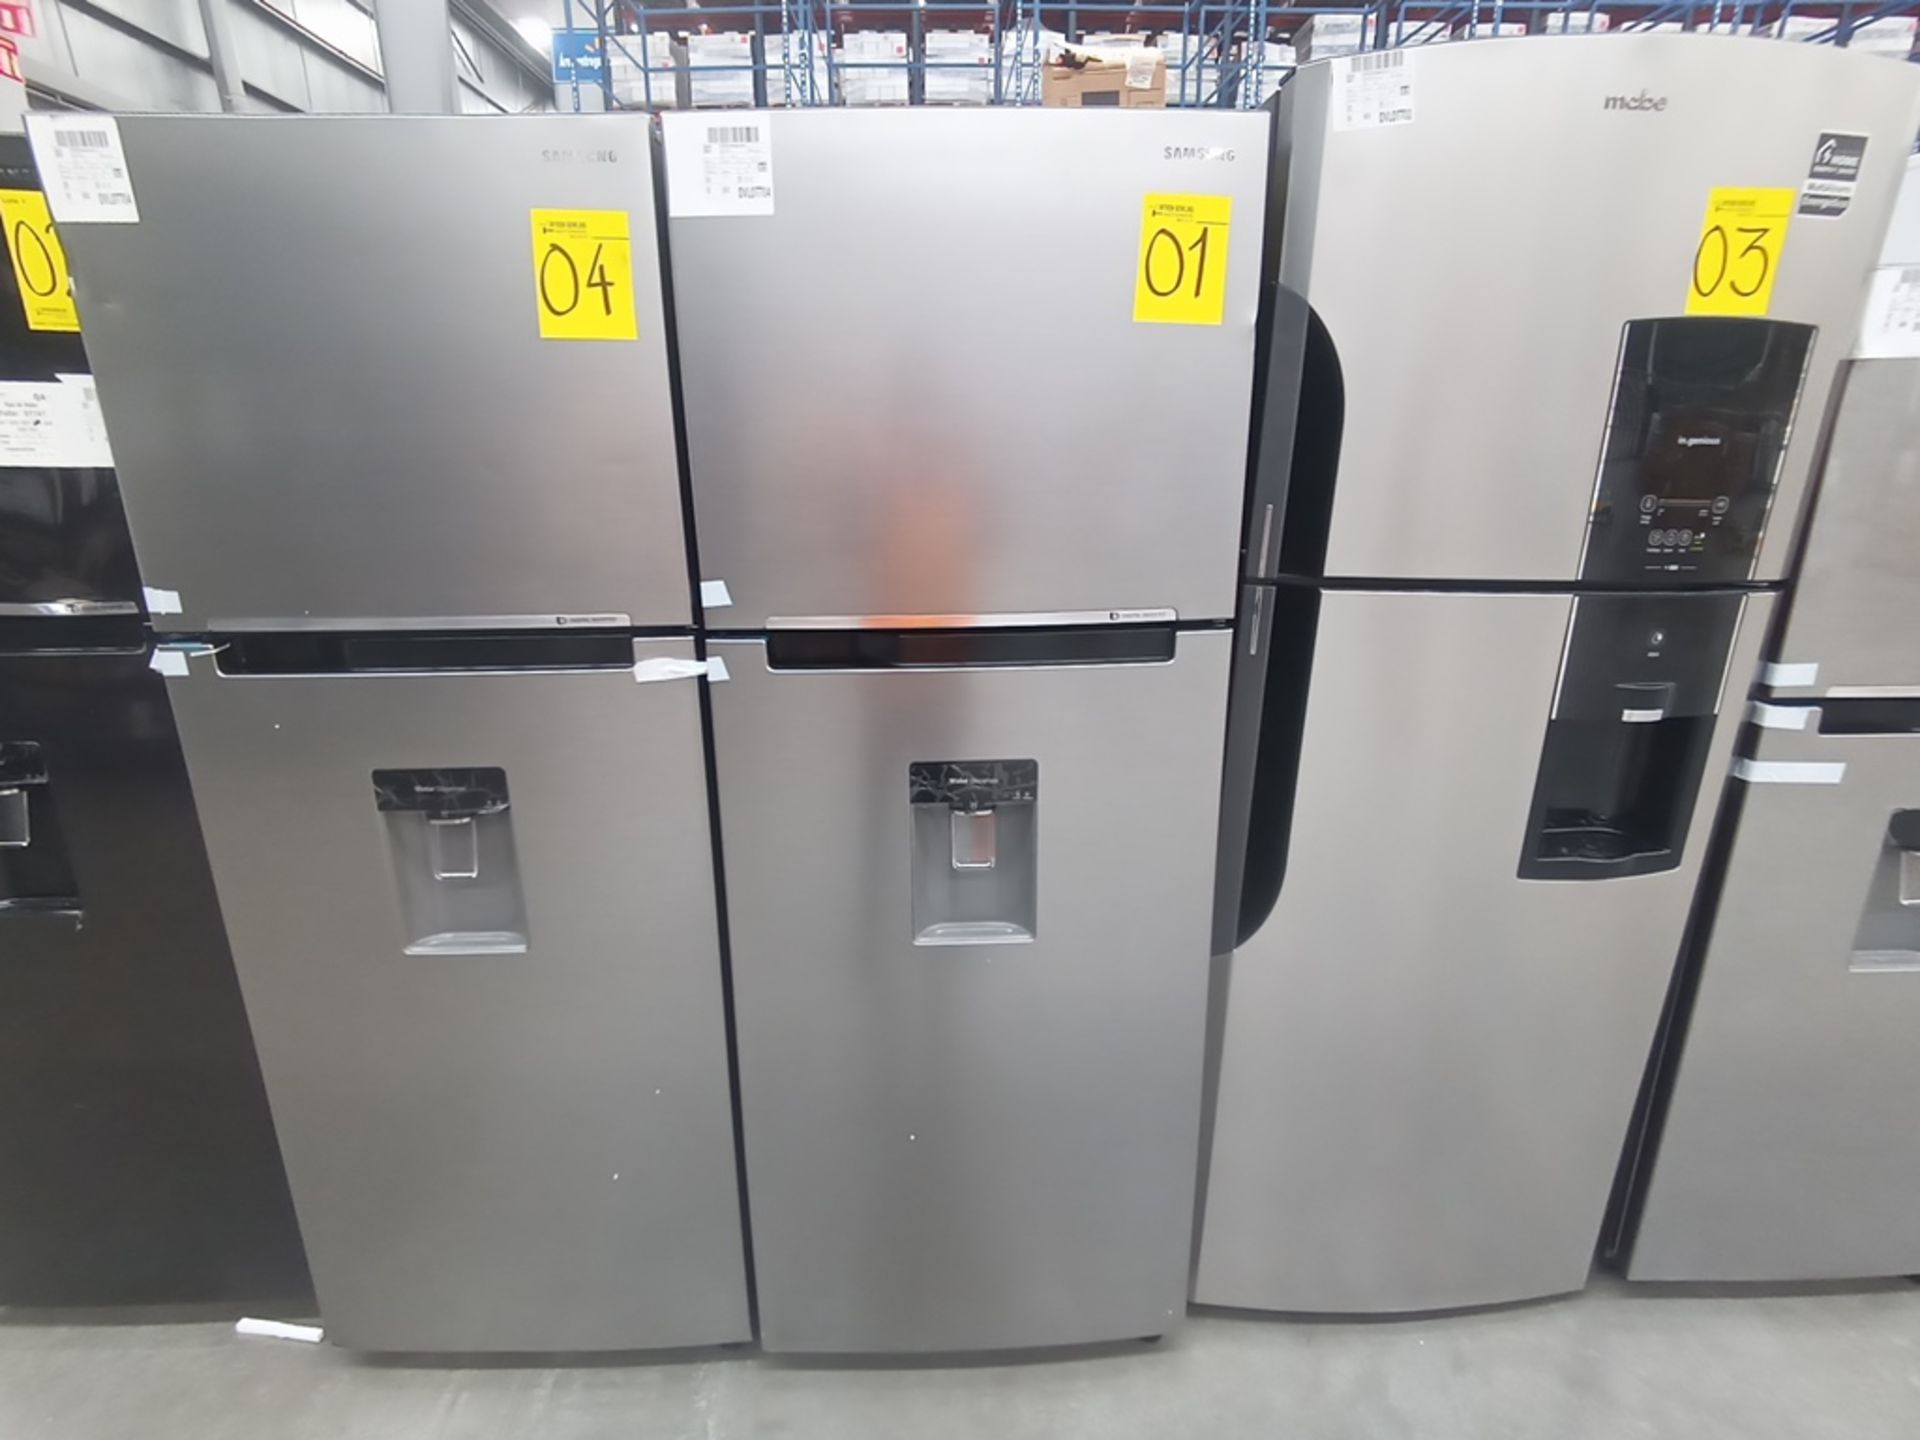 1 Refrigerador Marca Samsung, Modelo RT38AS71IS9, Serie 0BBT4BAT201582F, Color Gris, Golpeado, Favo - Image 3 of 11